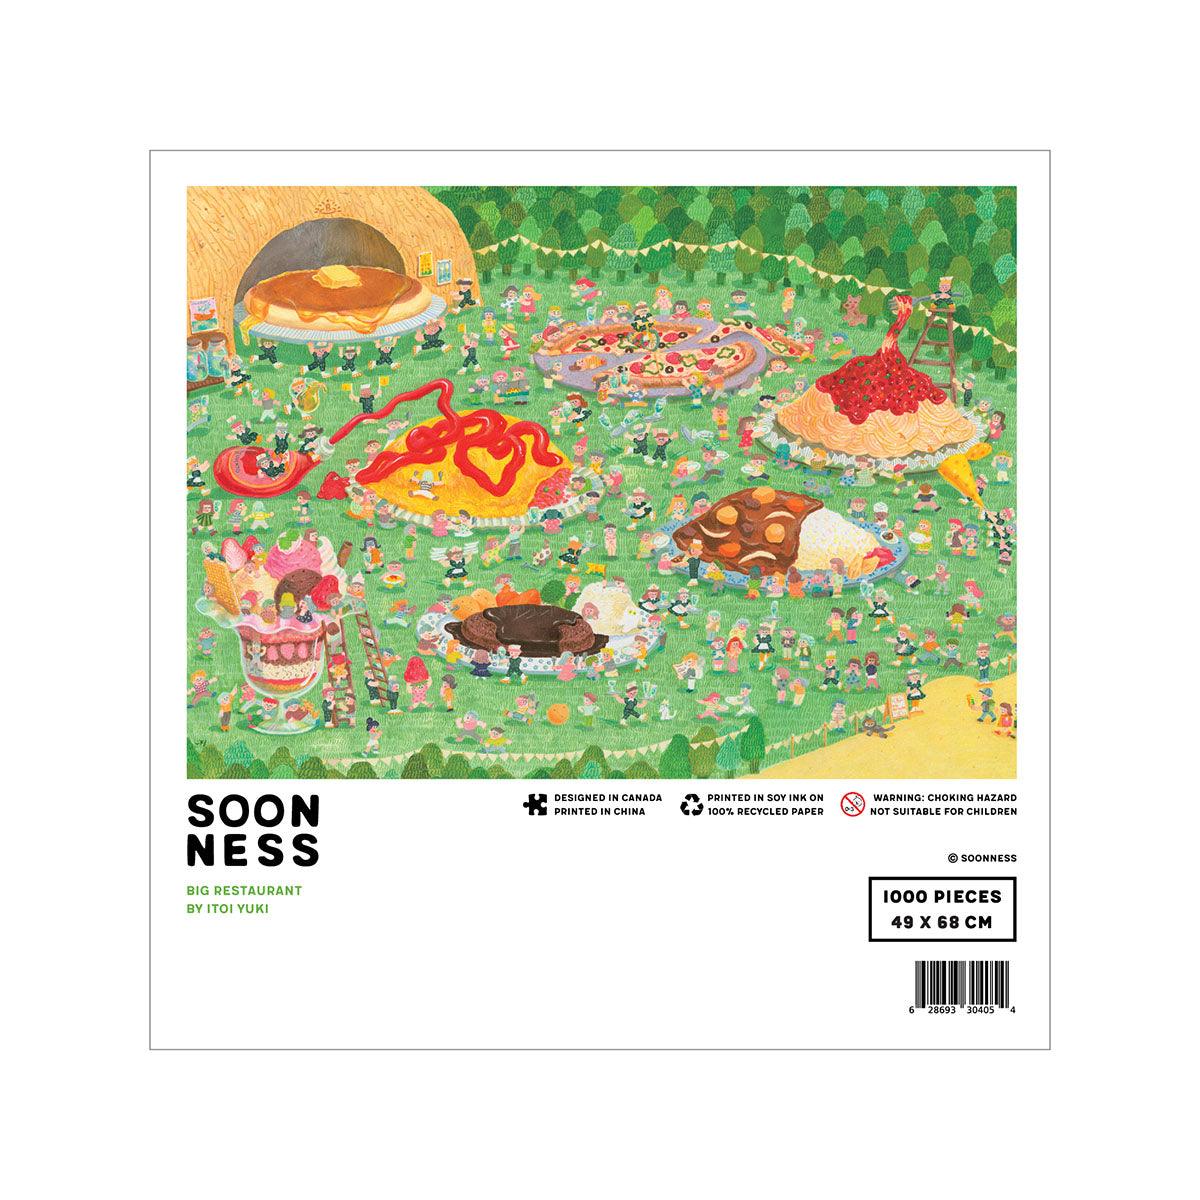 SOONNESS 1000 piece art puzzle big restaurant by illustrator itoi yuki